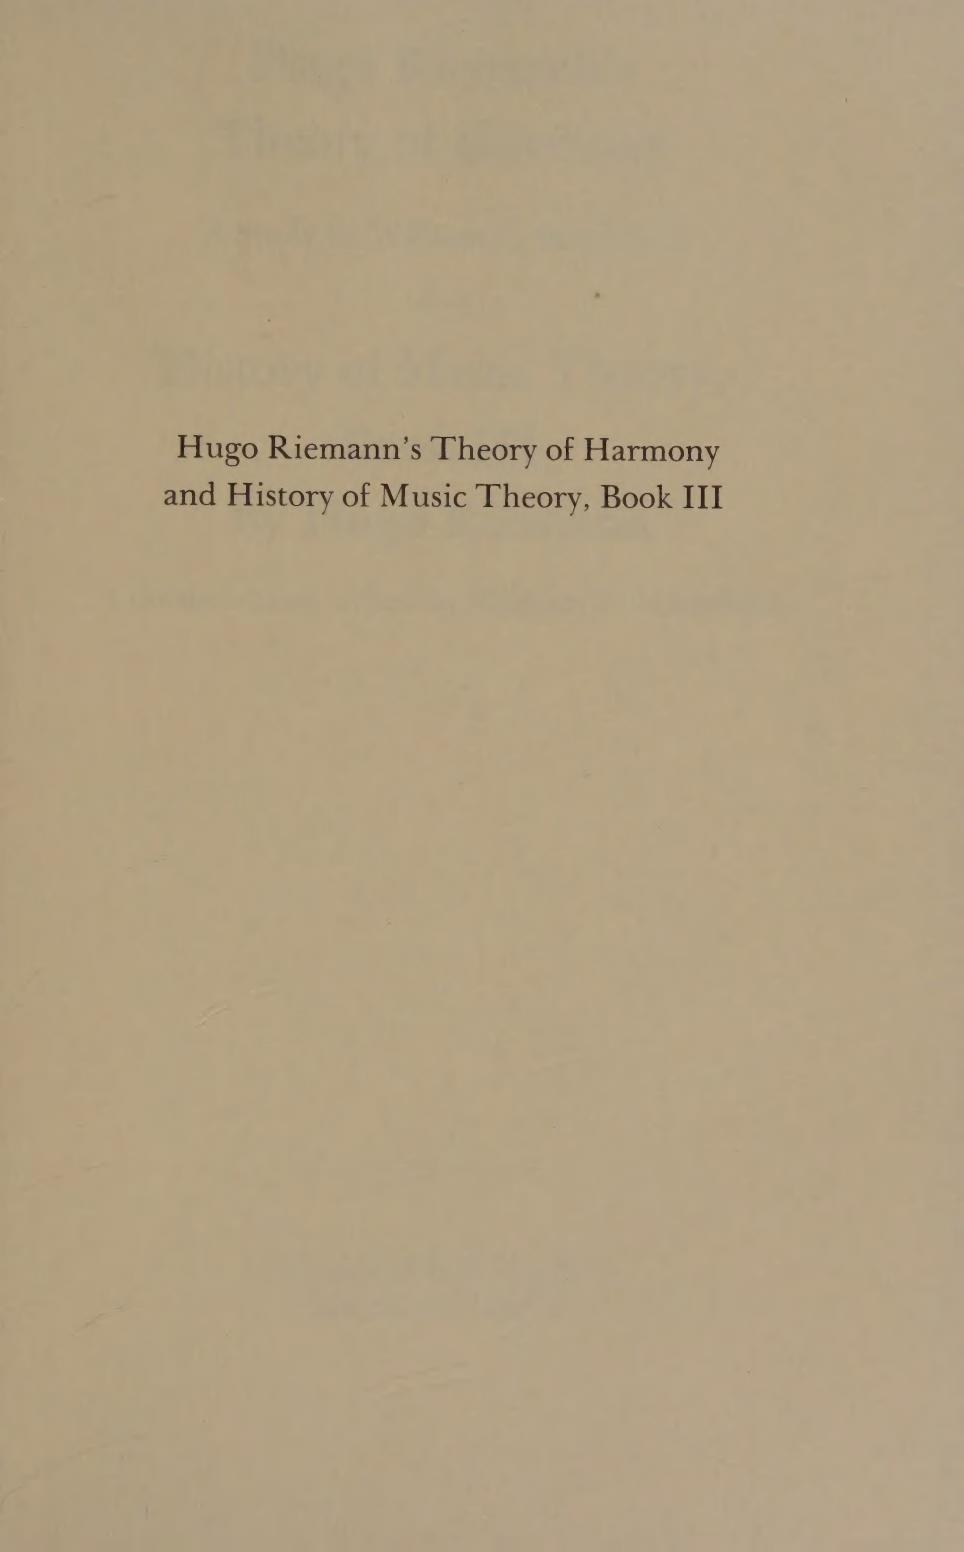 Hugo Riemann's Theory of Harmony: A Study